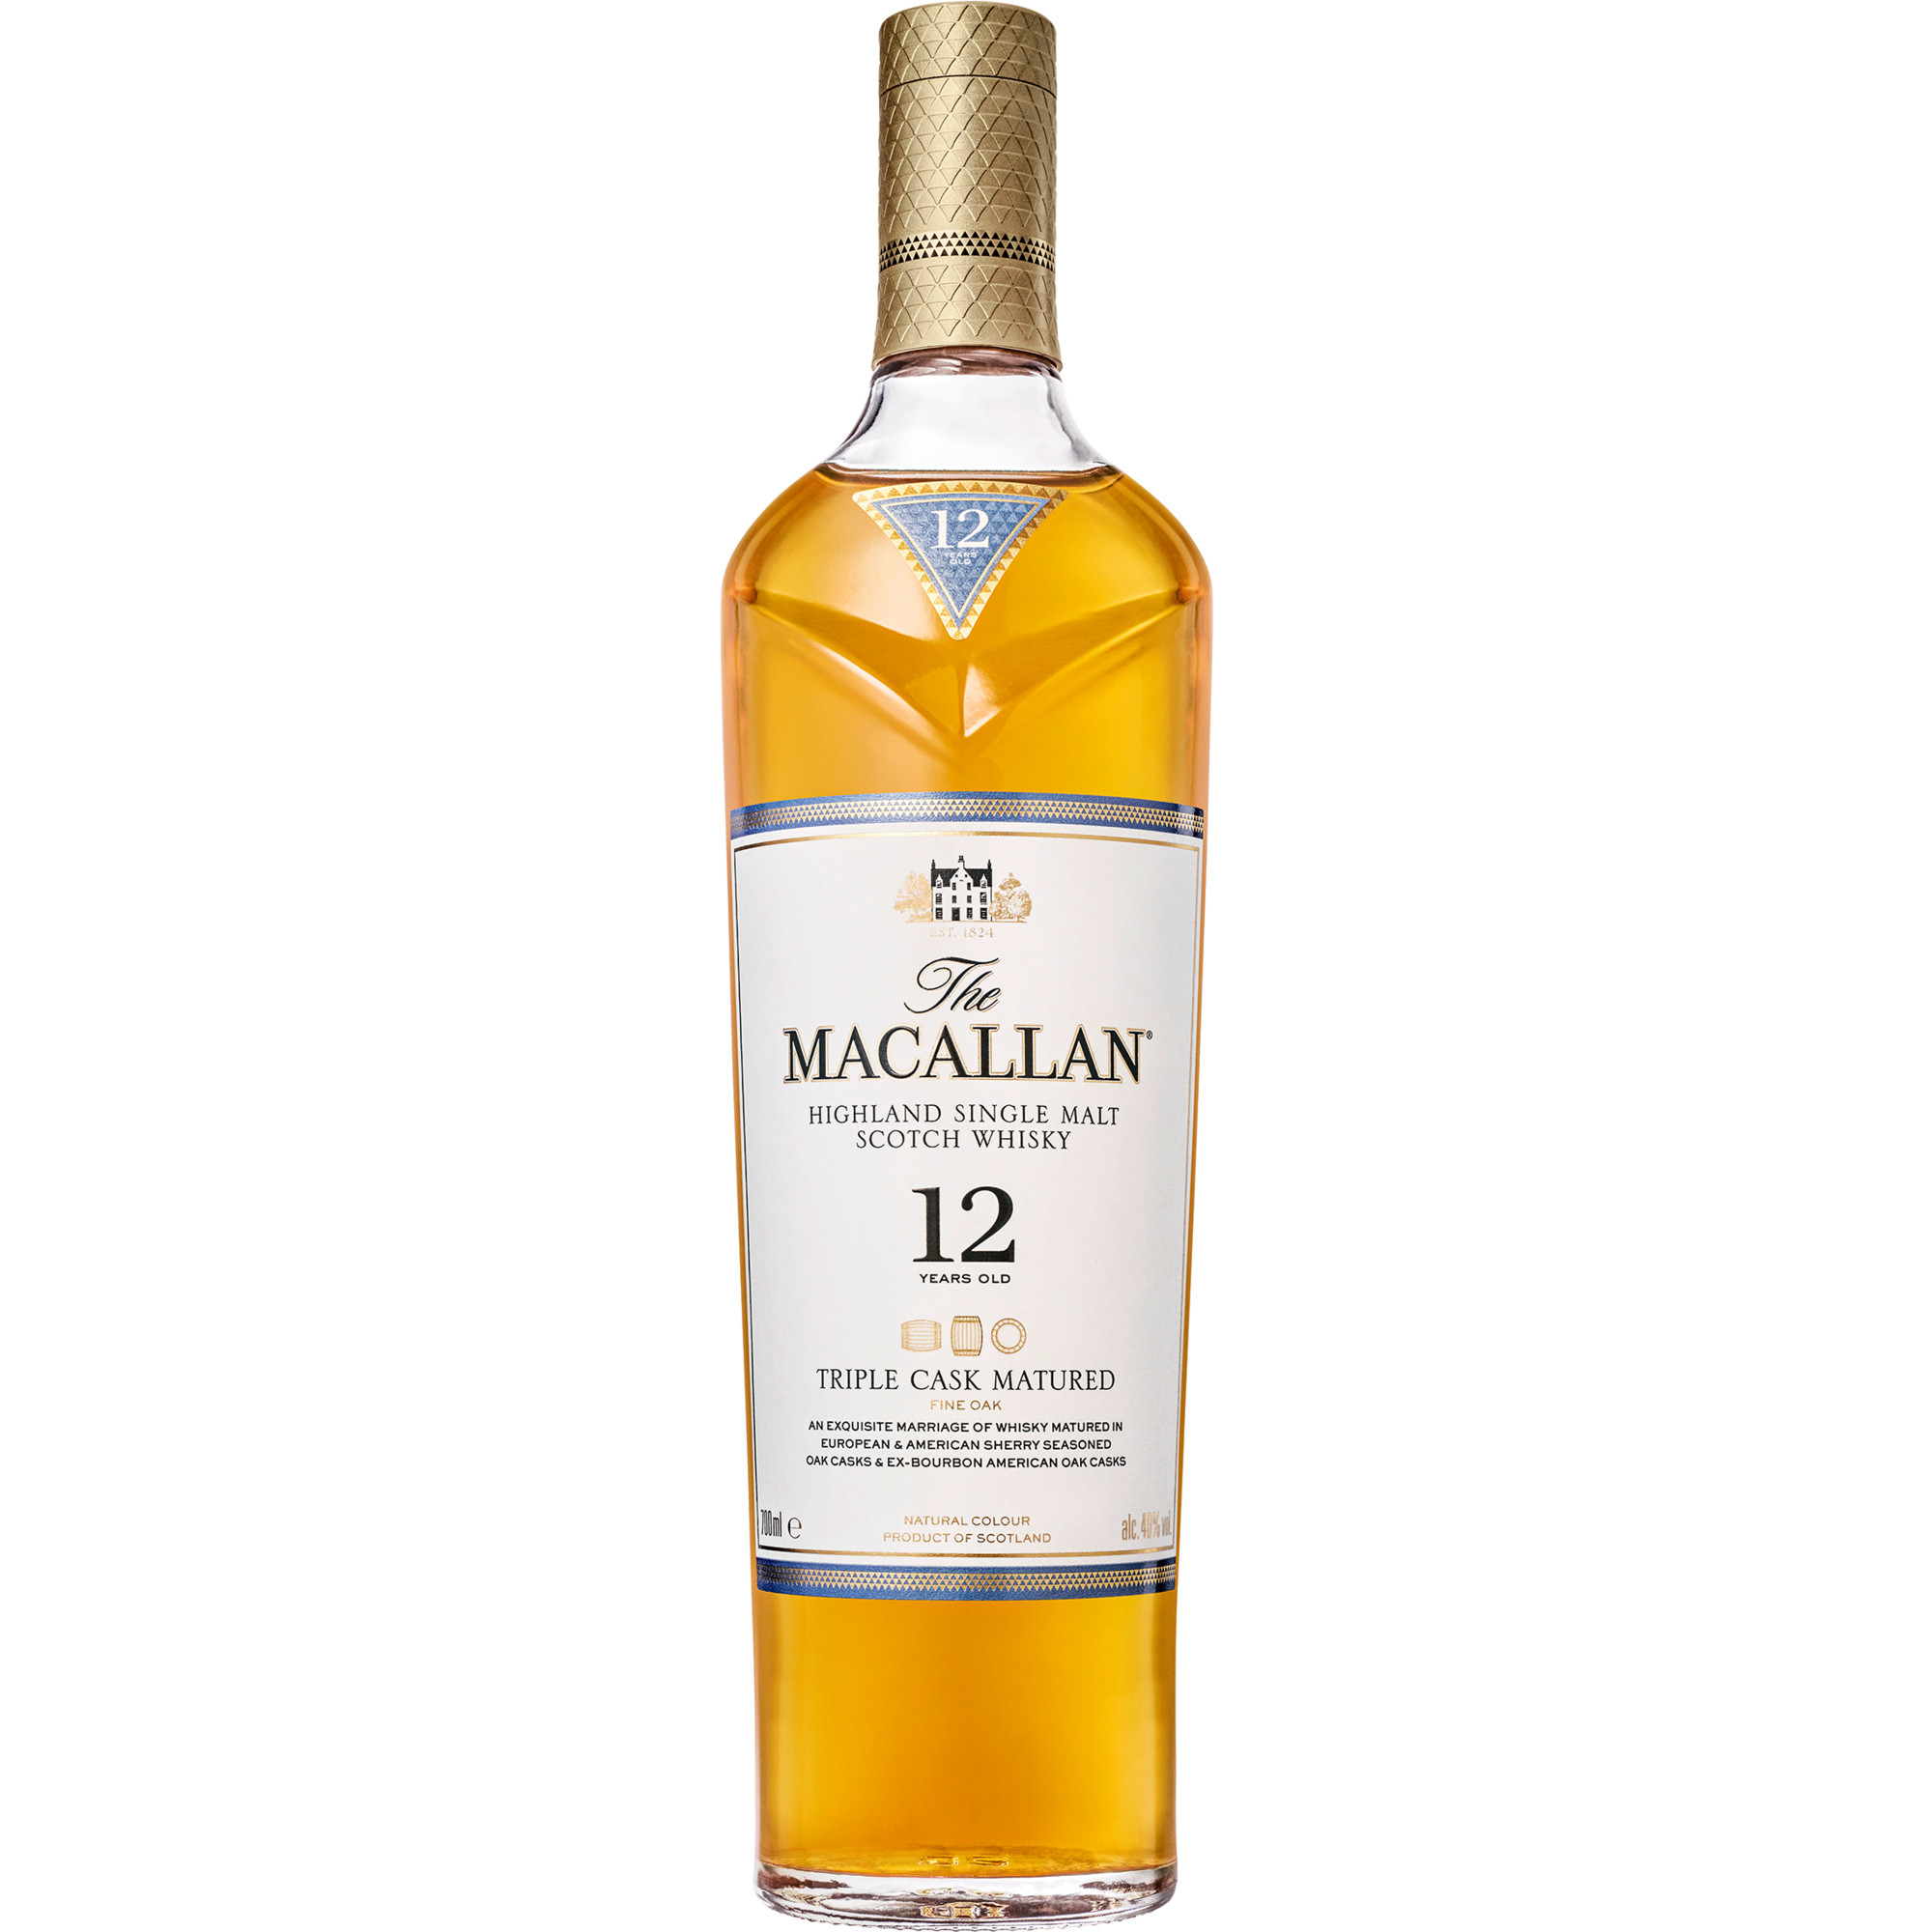 Macallan 12 Years Triple Cask Single Malt, Whisky, 0,7 L, 40% Vol., Spirituosen The Edrington Group, 2500 Great Western Roas, Glasgow, G15 6RW, Scotland Hawesko DE